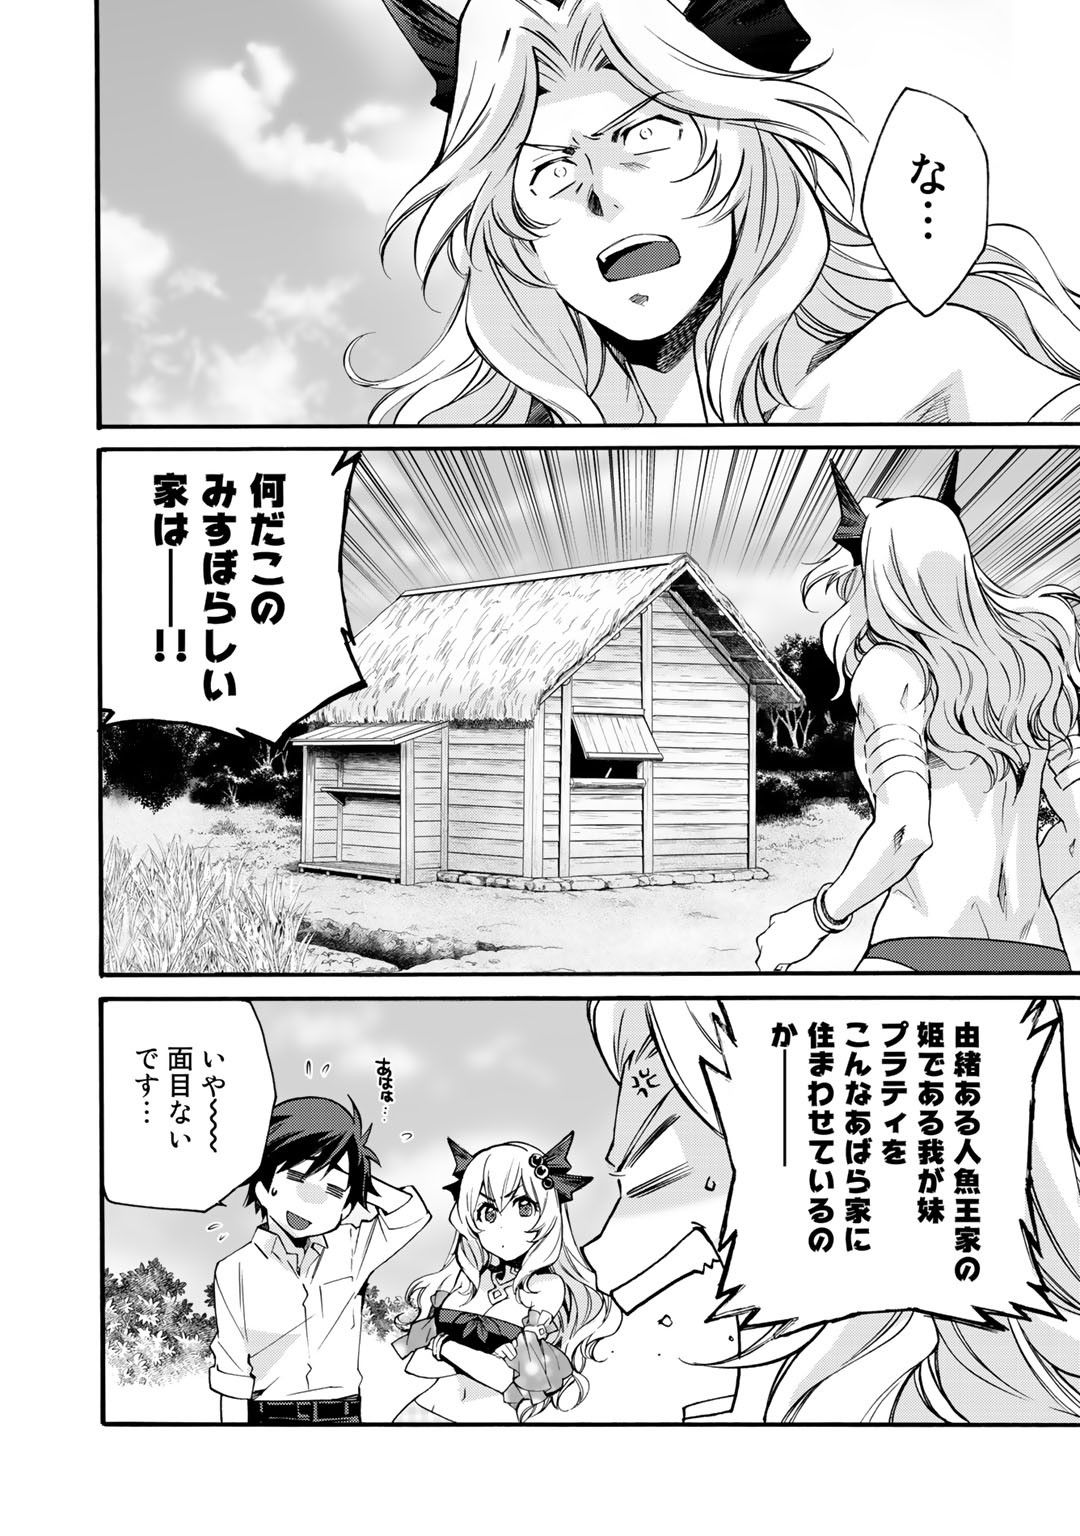 Isekai de Tochi wo Katte Noujou wo Tsukurou - Chapter 8 - Page 2